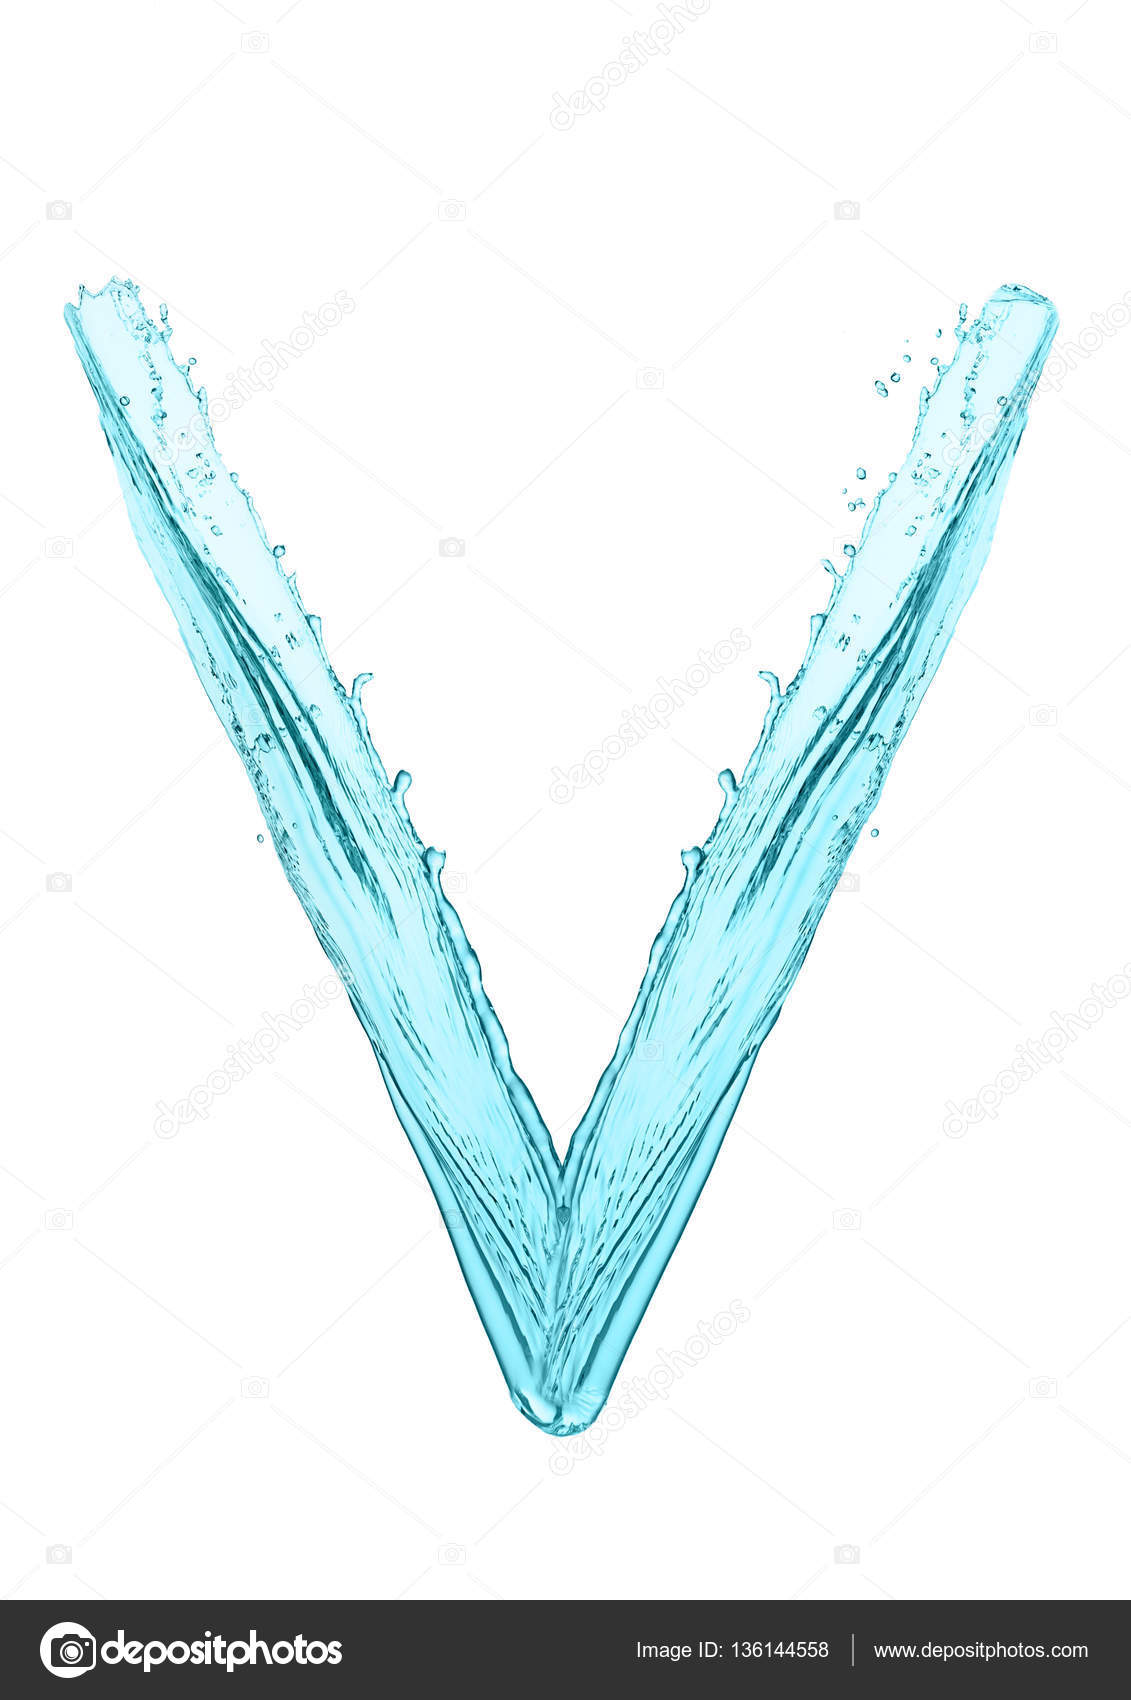 Water Splash Letter V With Light Blue Color Stock Photo By C Denismart